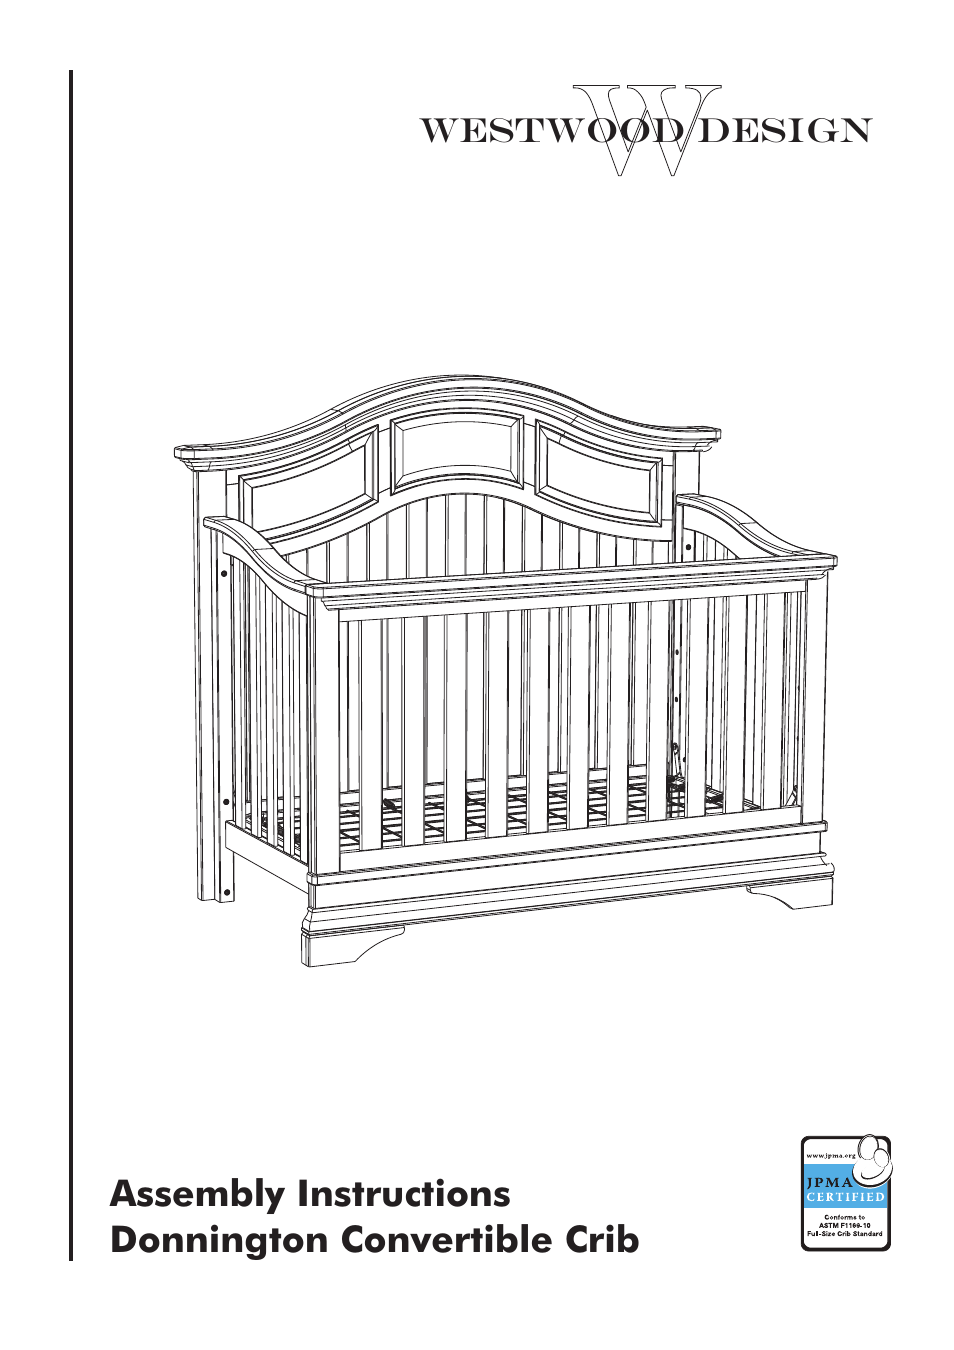 Donnington Convertible Crib